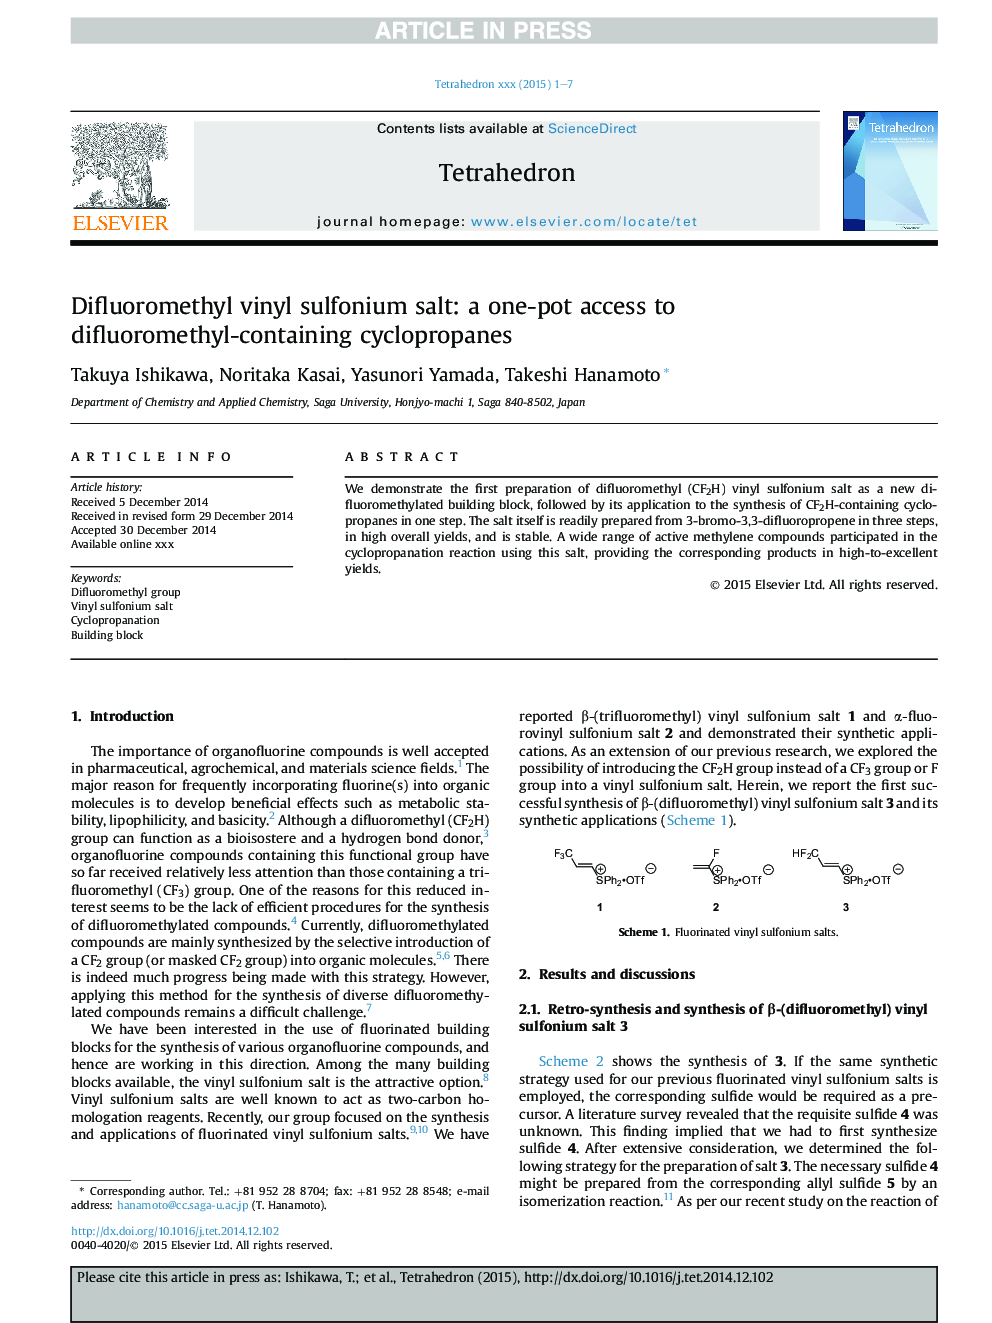 Difluoromethyl vinyl sulfonium salt: a one-pot access to difluoromethyl-containing cyclopropanes